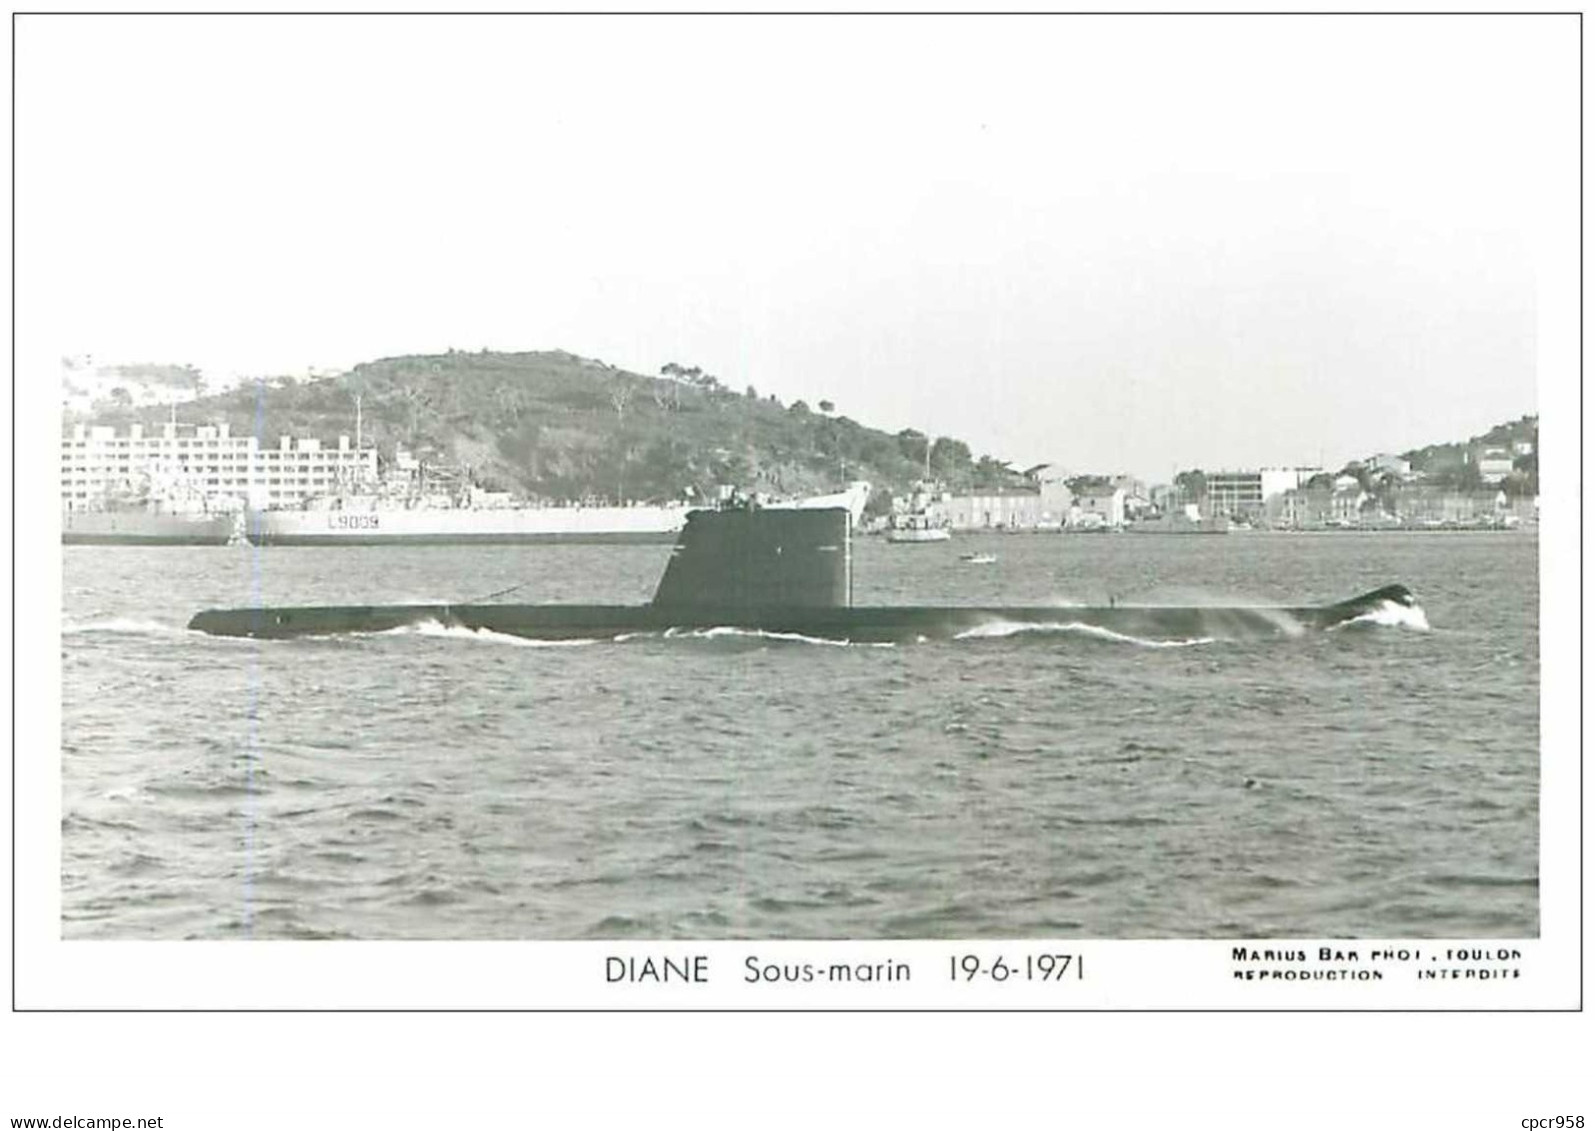 SOUS-MARINS.n°24877.PHOTO DE MARIUS BAR.DIANE.19.6.1971 - Submarinos